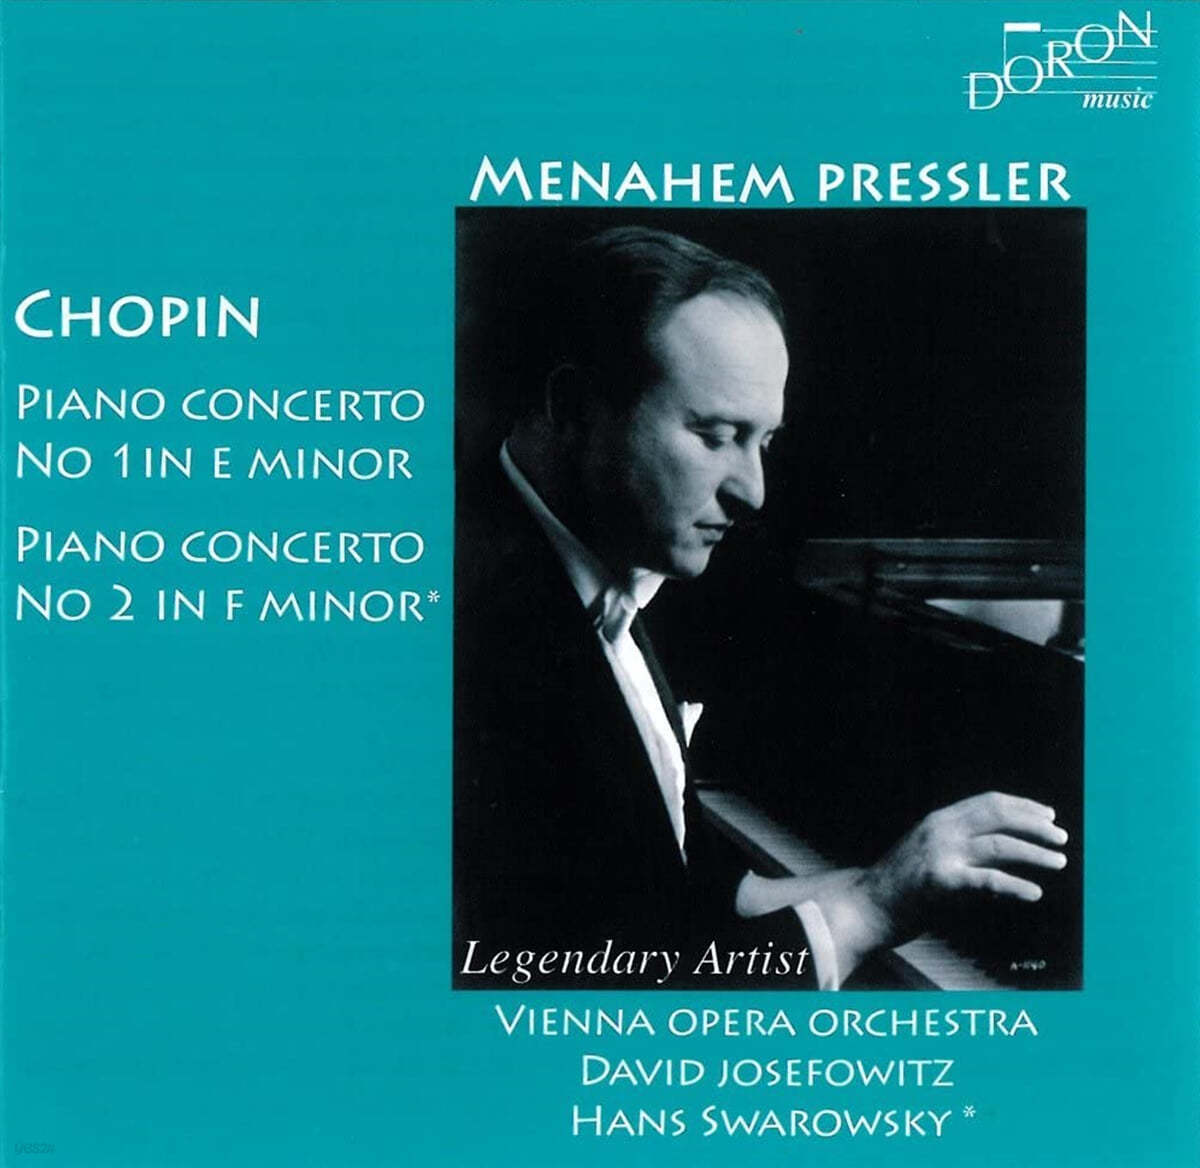 Menahem Pressler 쇼팽: 피아노 협주곡 1, 2번 - 메나헴 프레슬러 (Chopin: Piano Concertos Op.11, Op.22) 